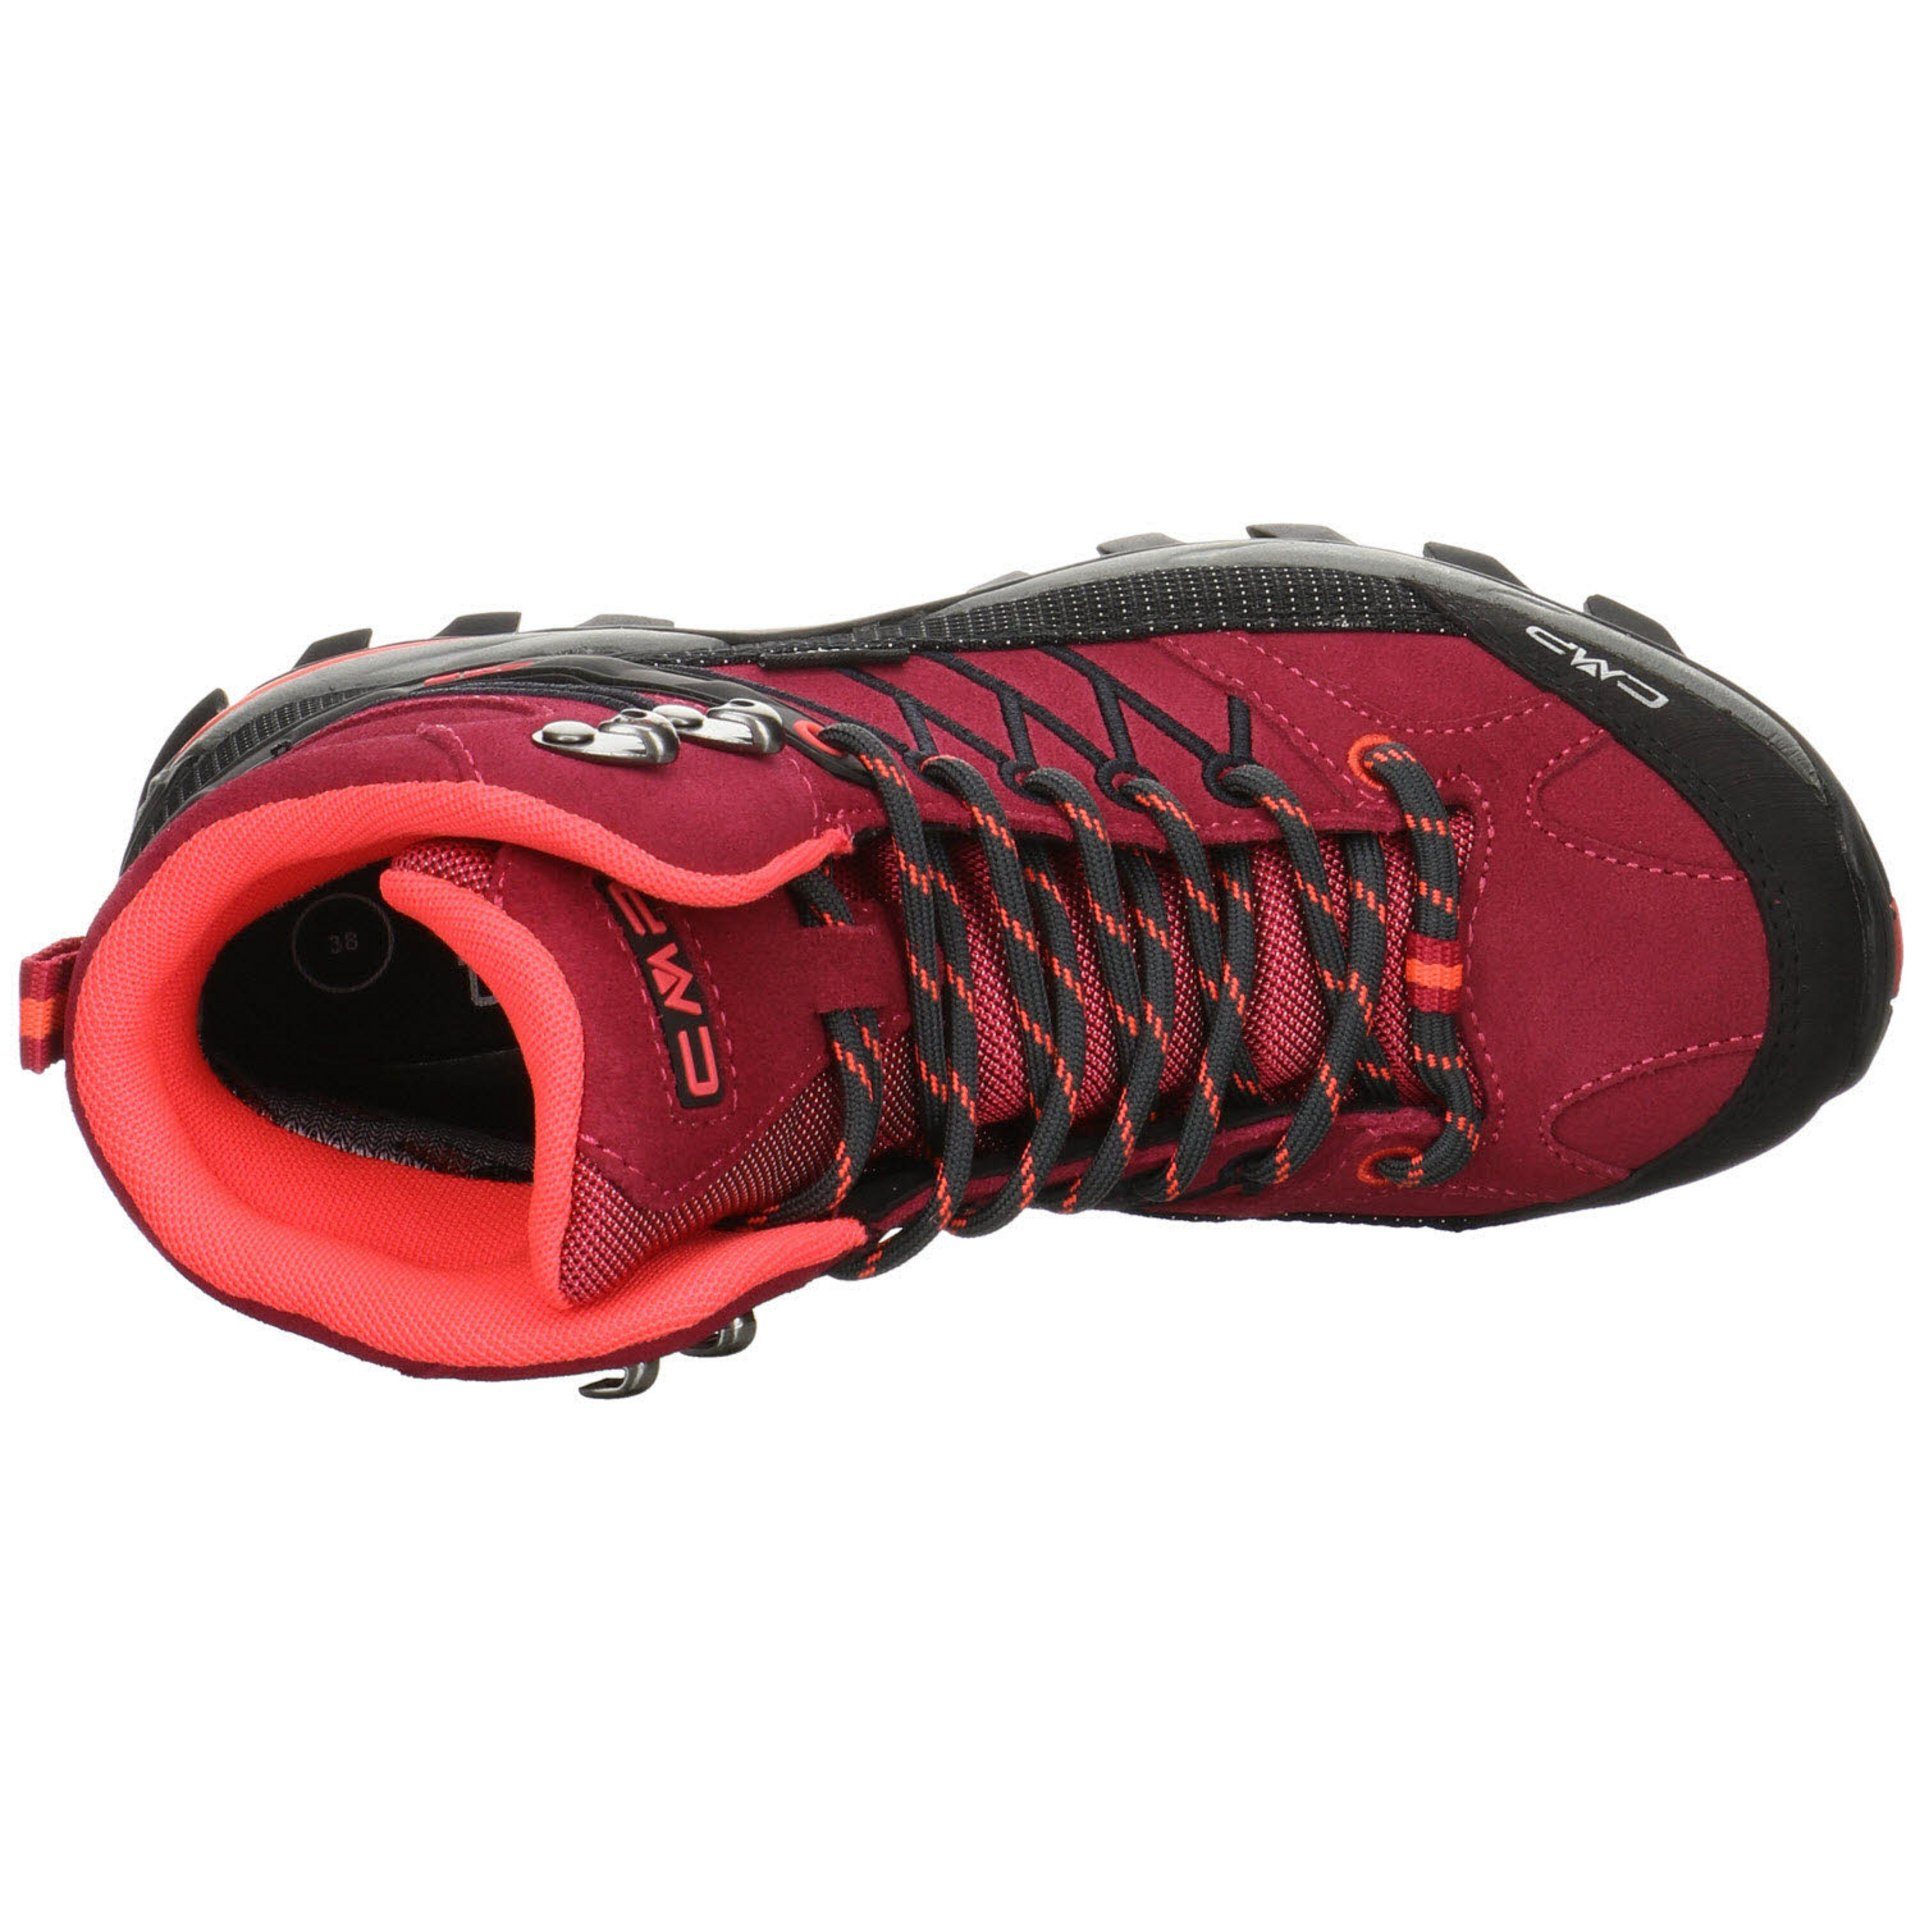 CMP Damen Outdoorschuh Schuhe Outdoorschuh Rigel Mid Outdoor MAGENTA-ANTRACITE Leder-/Textilkombination